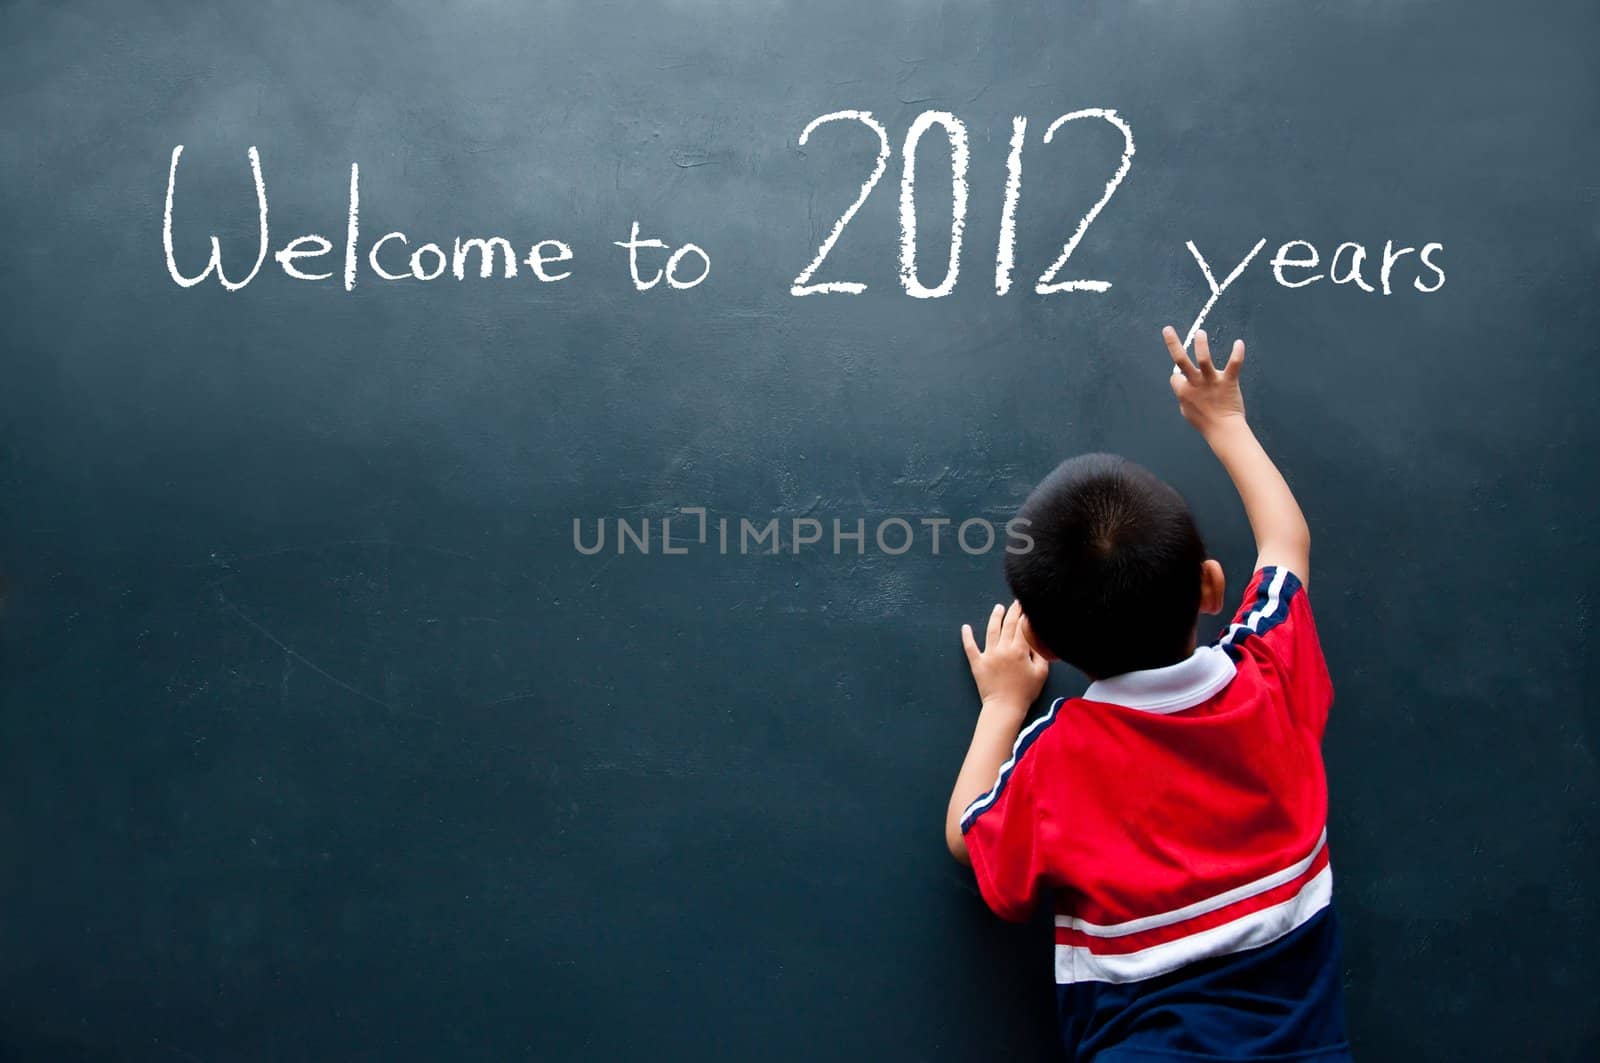 Welcome to 2012 years by joneshon